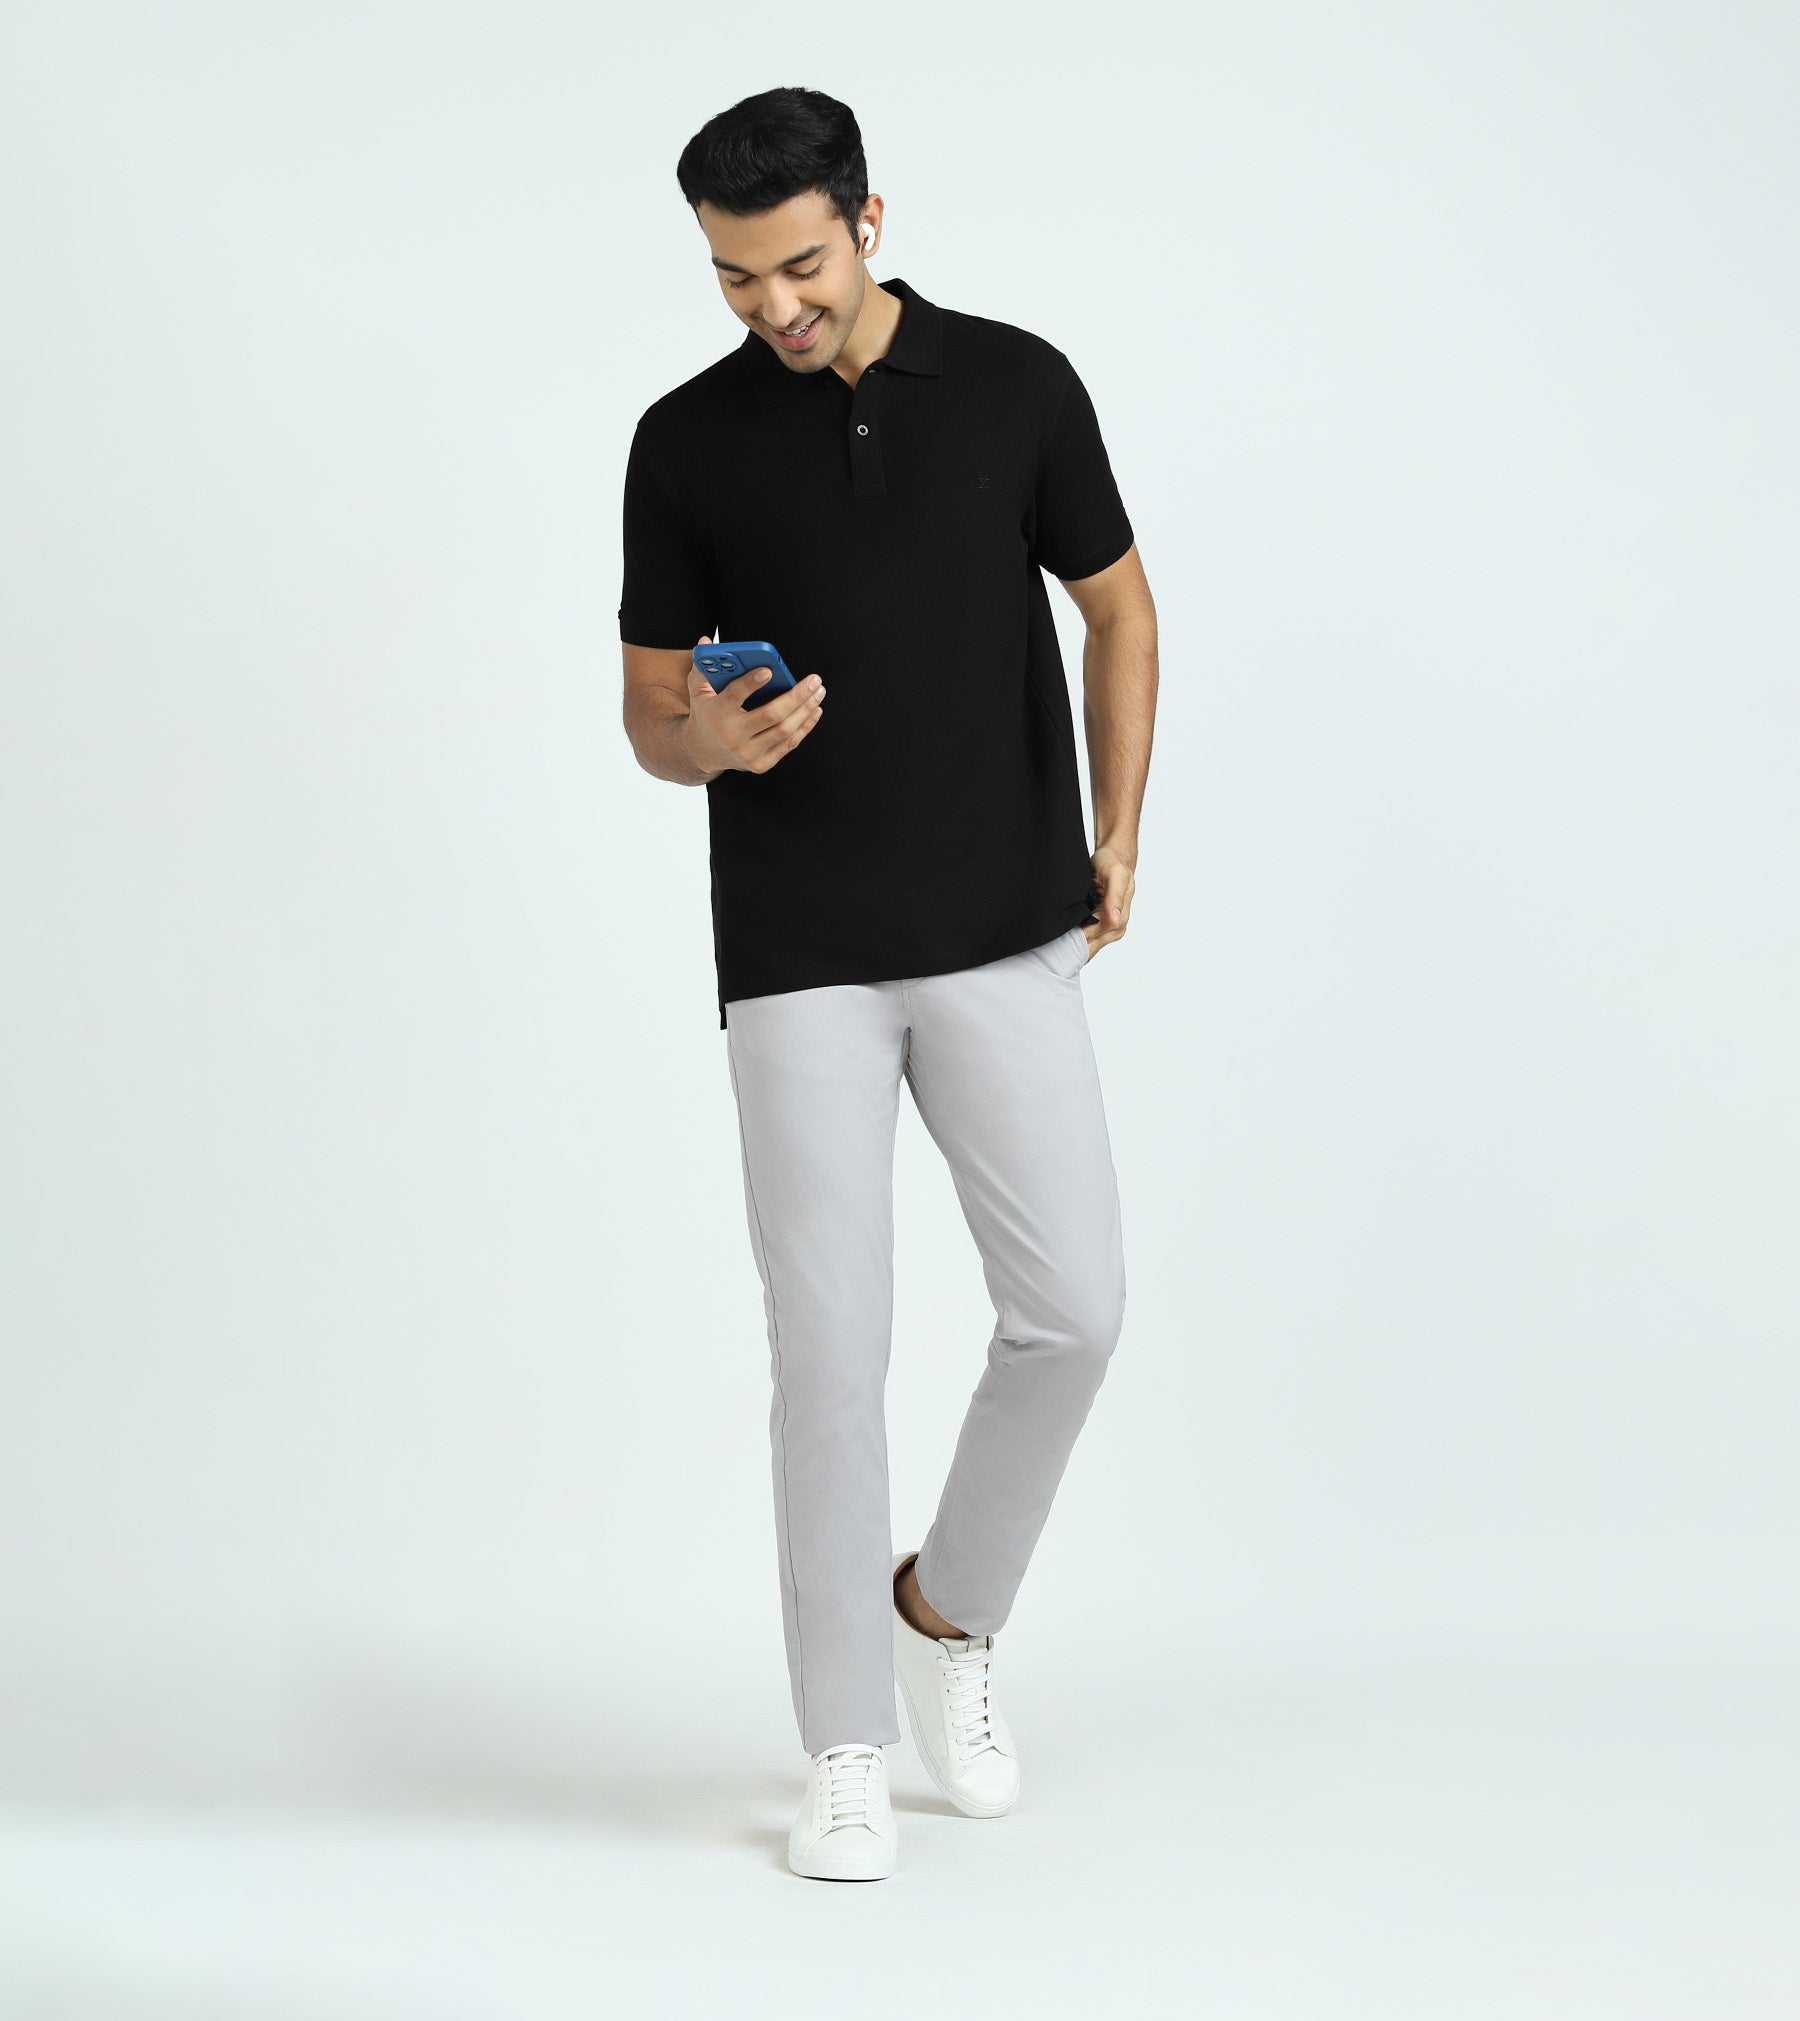 Men's Black Polo, Grey Dress Pants, White Leather Low Top Sneakers, Black  Socks | Lookastic